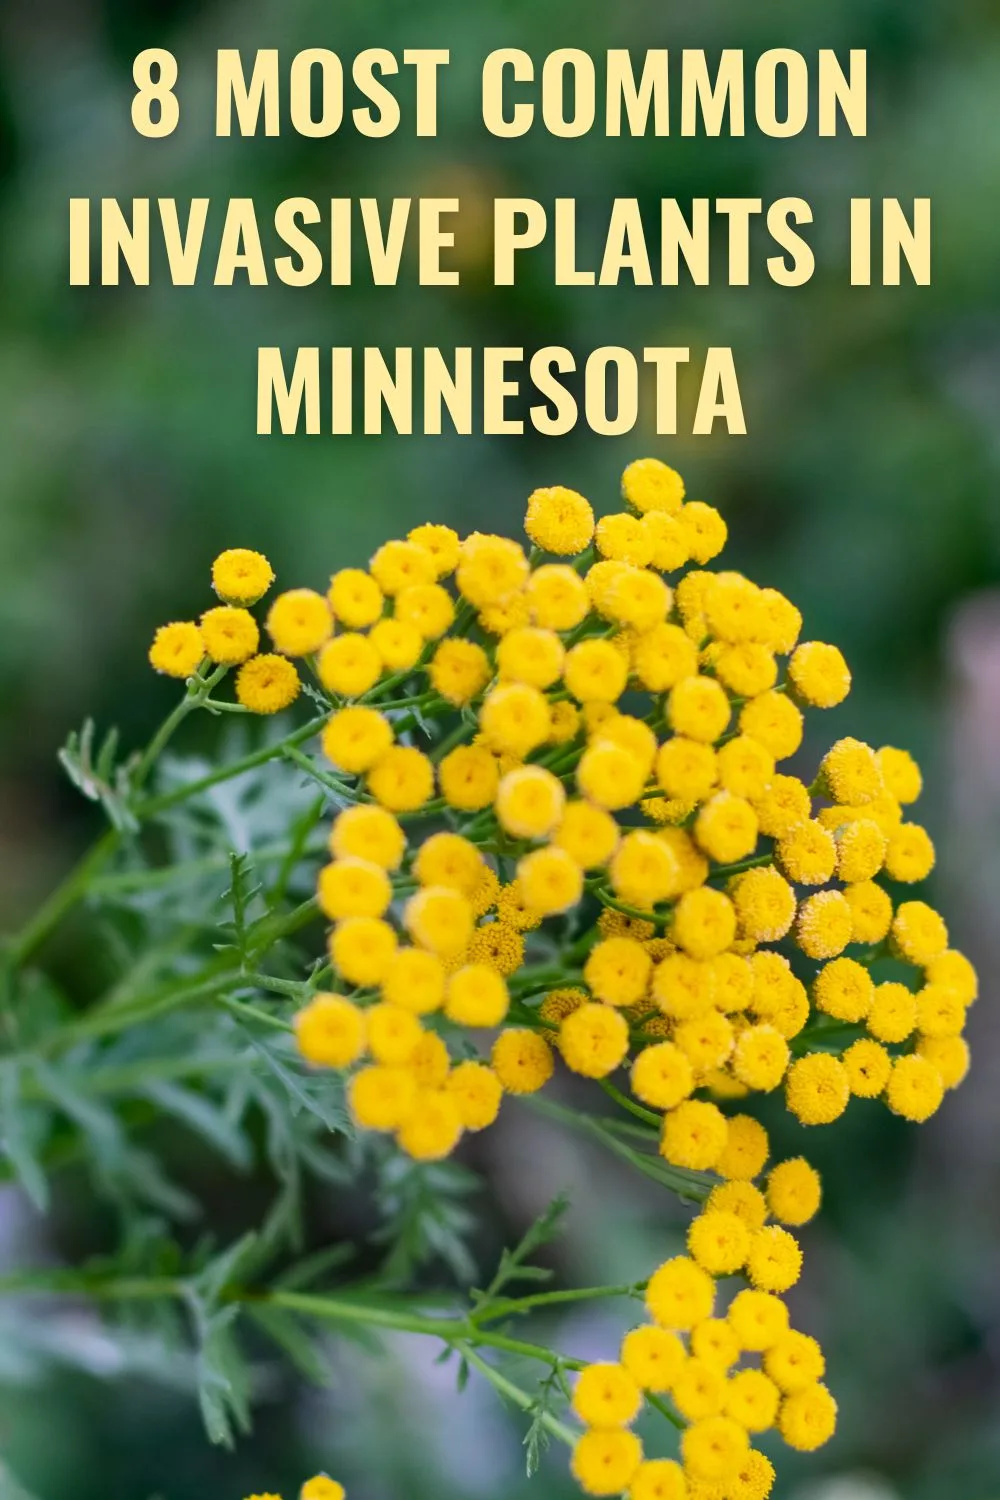 Eight most common invasive plants in Minnesota.